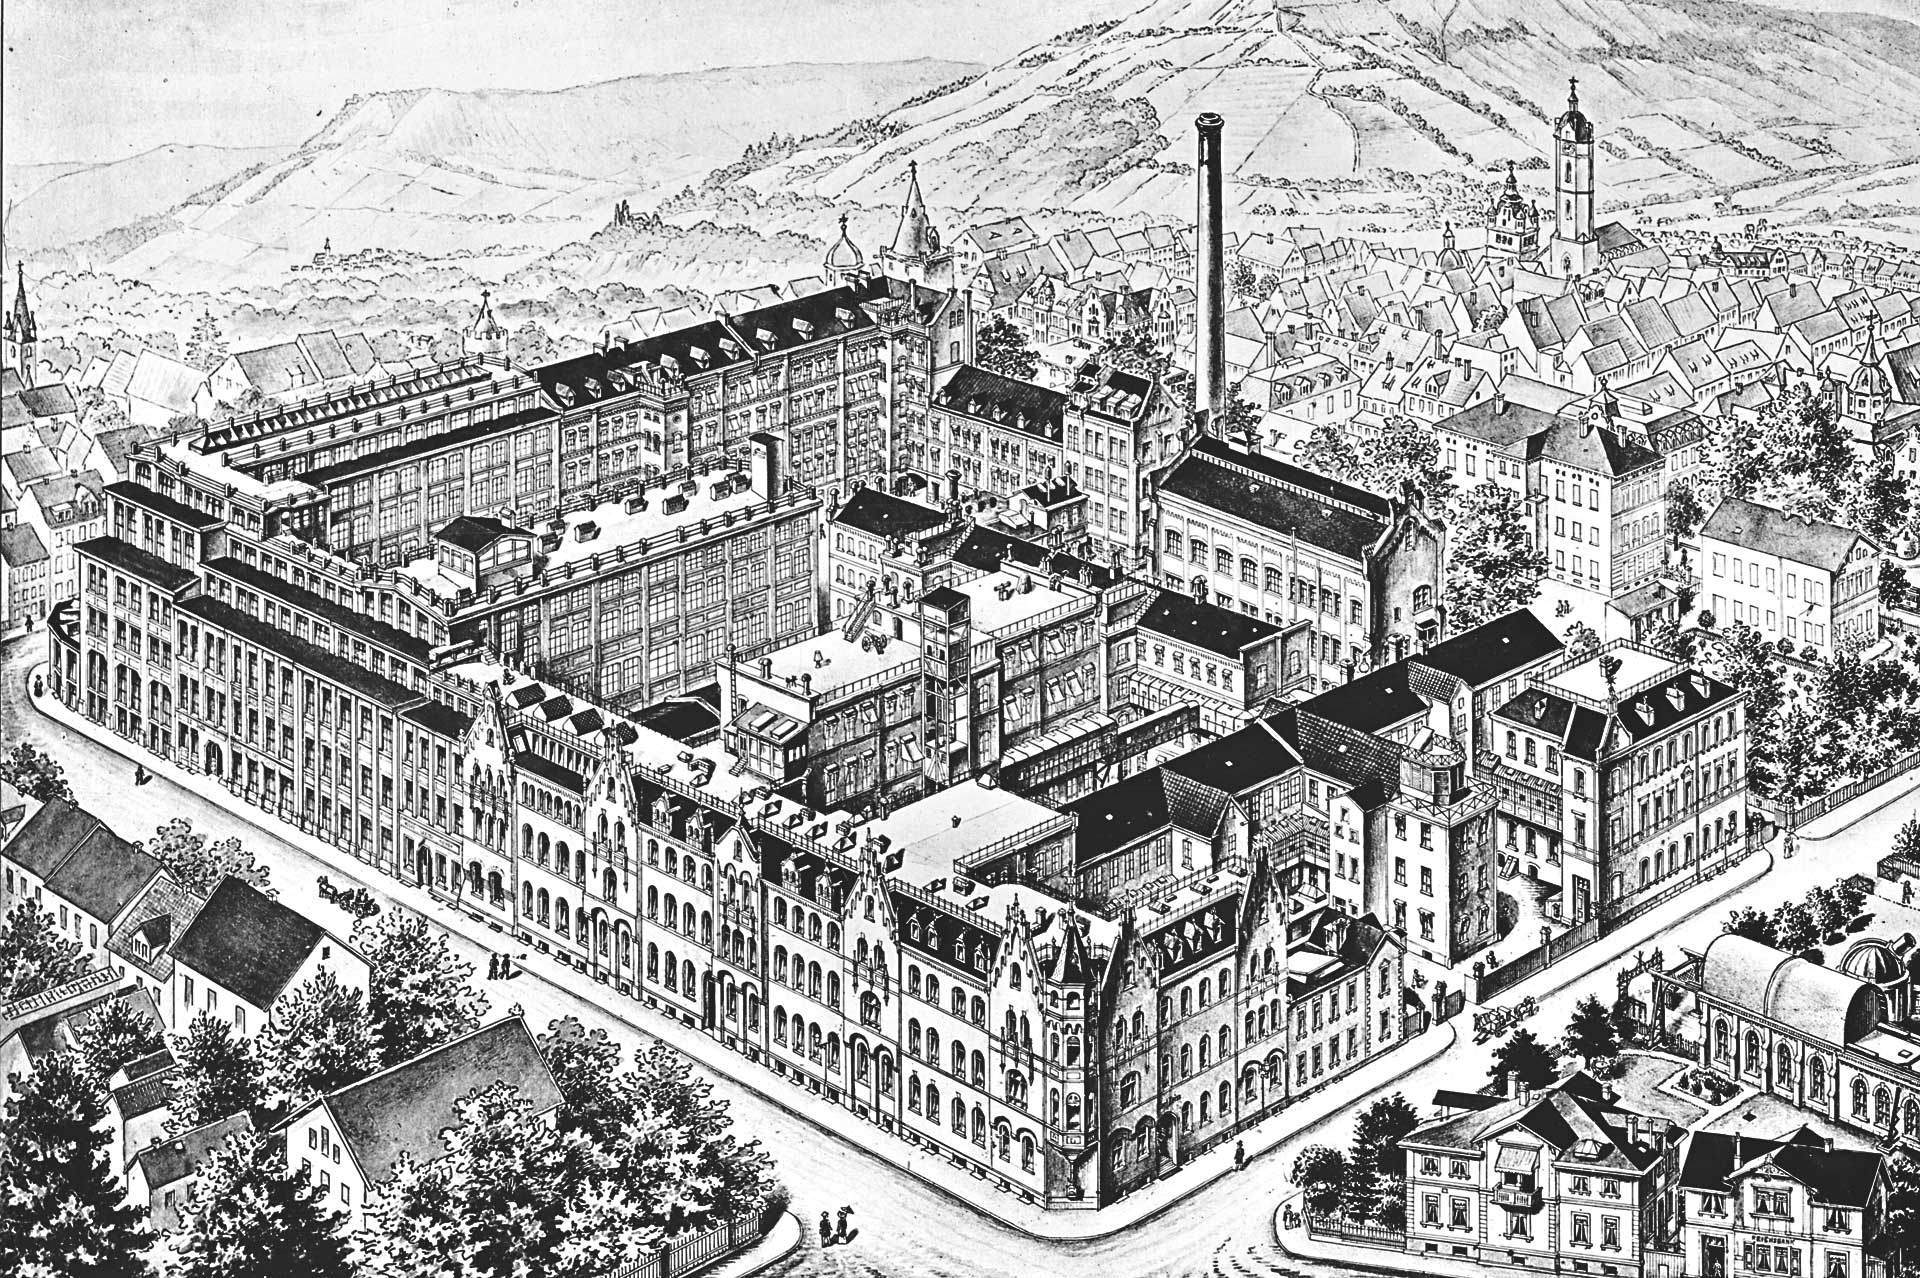 Carl Zeiss factory in 1908